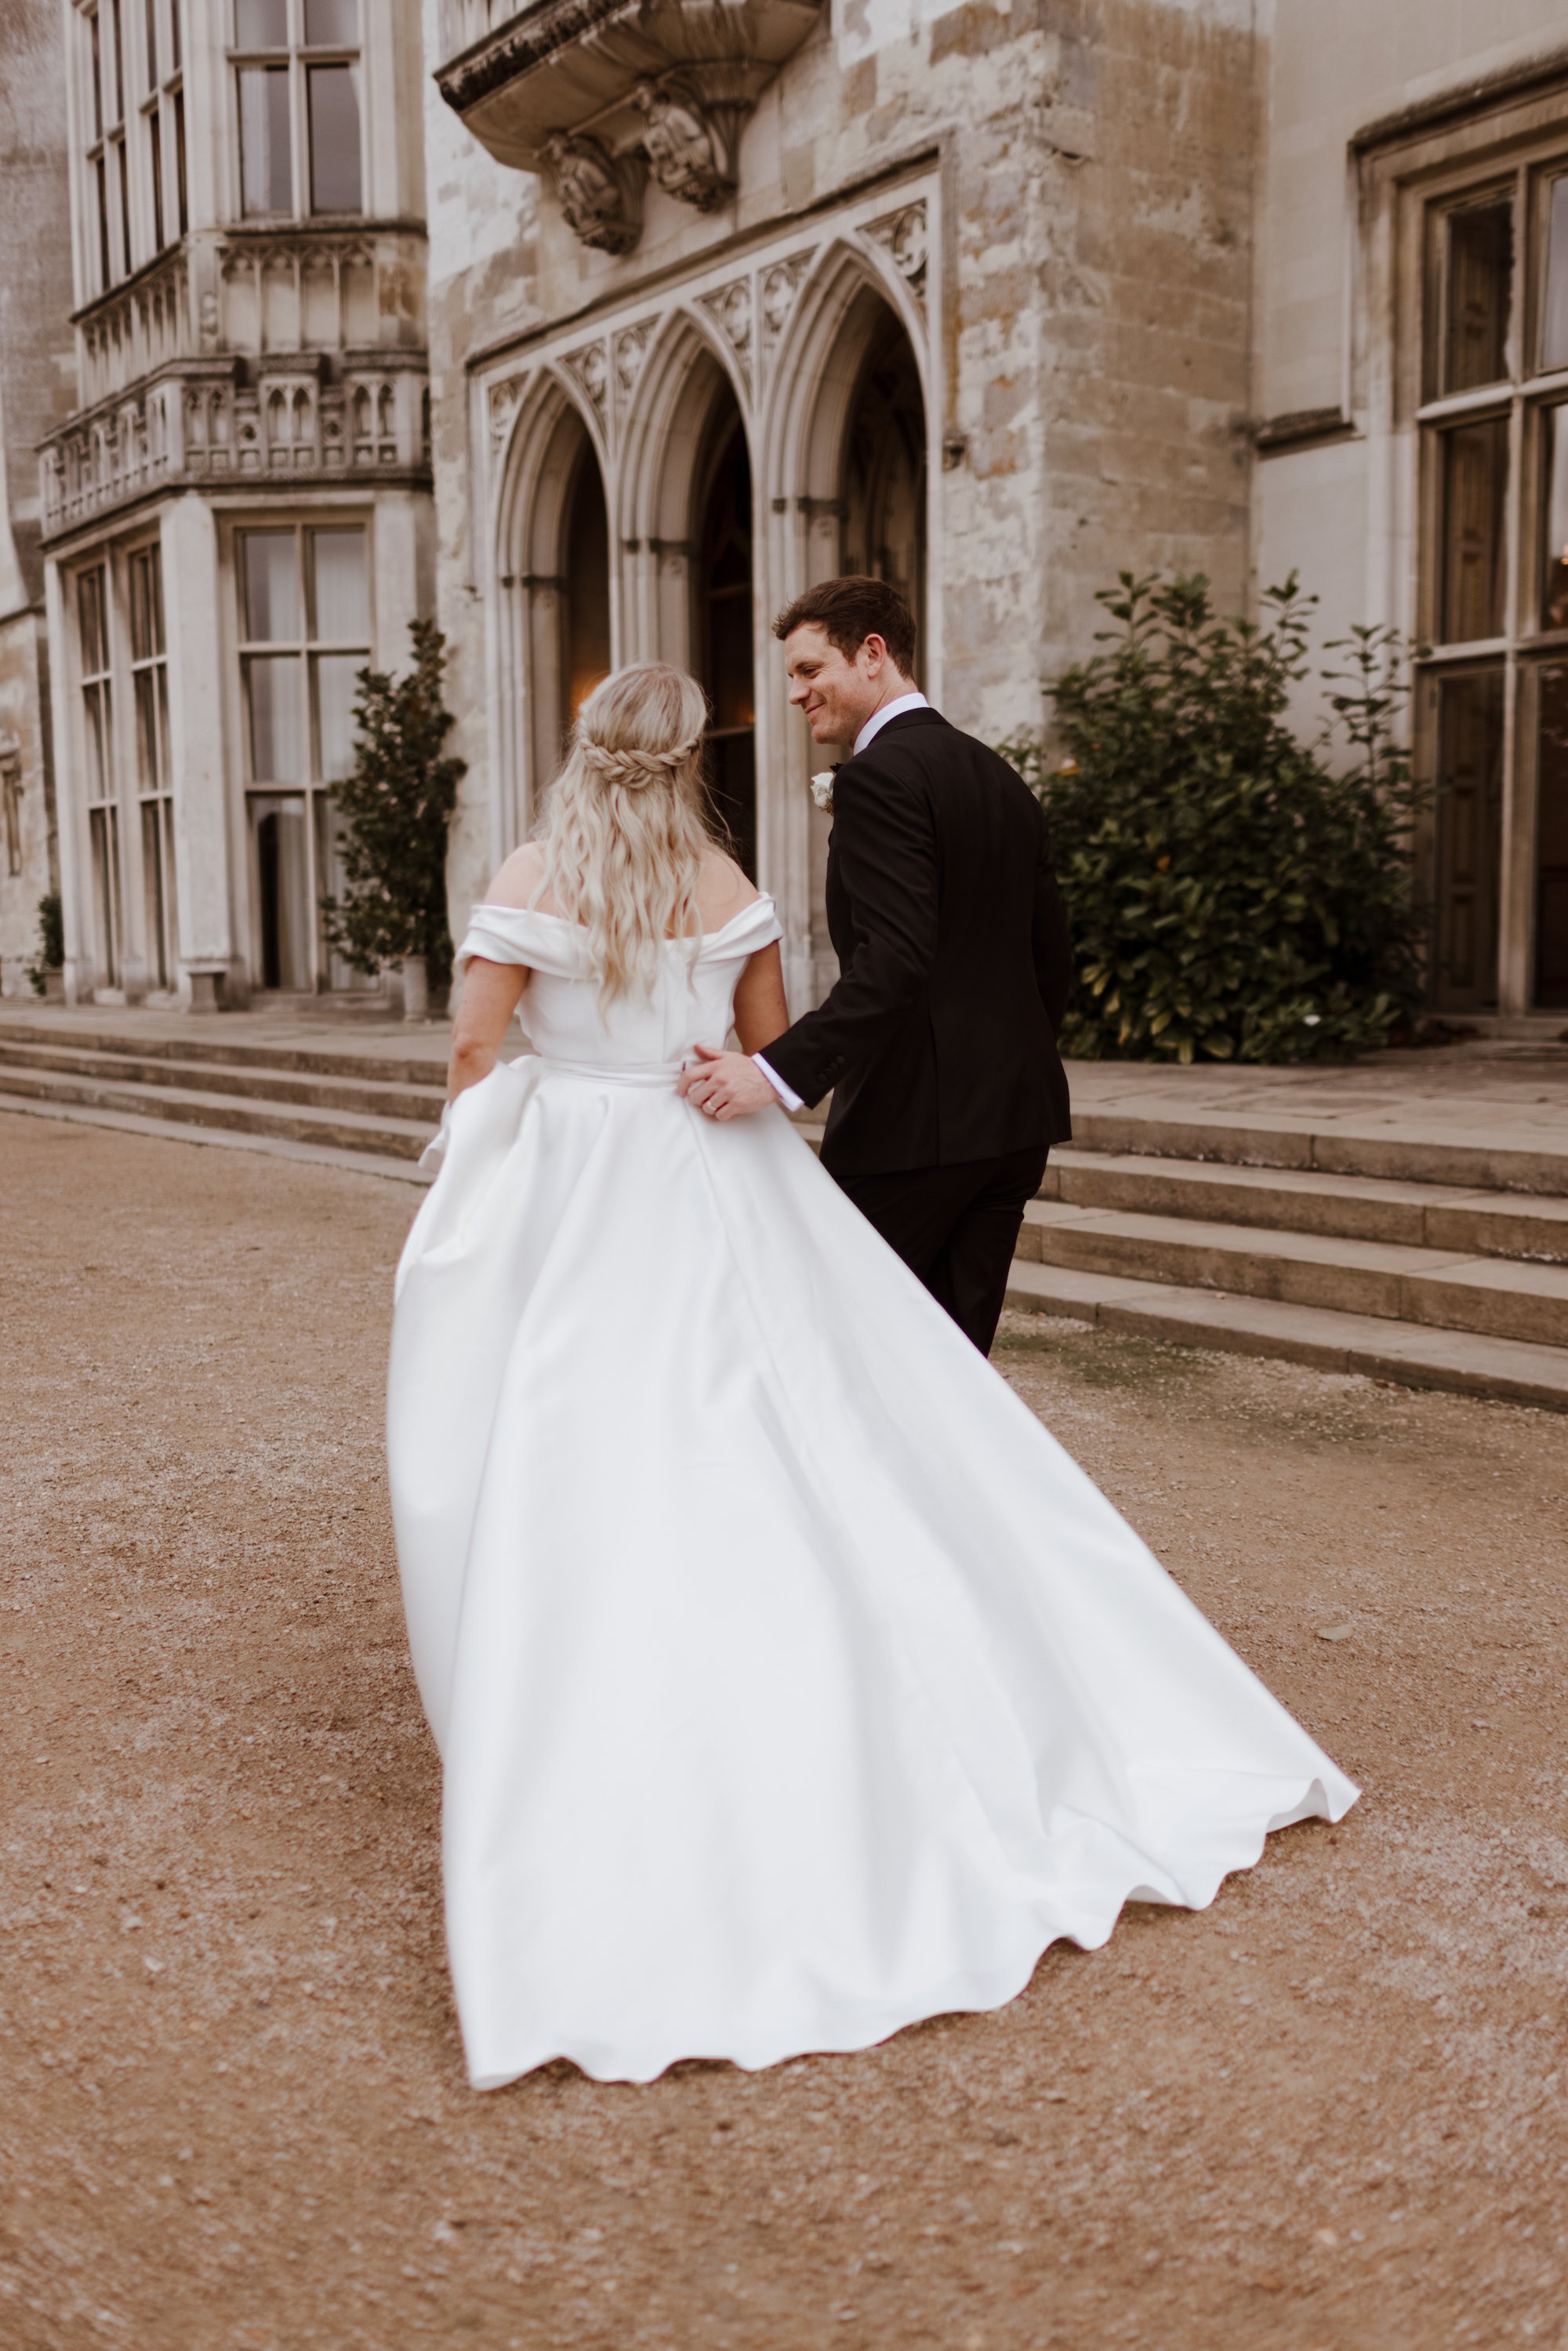 Beautiful bride Alex Light wore a wedding dress by Halfpenny London